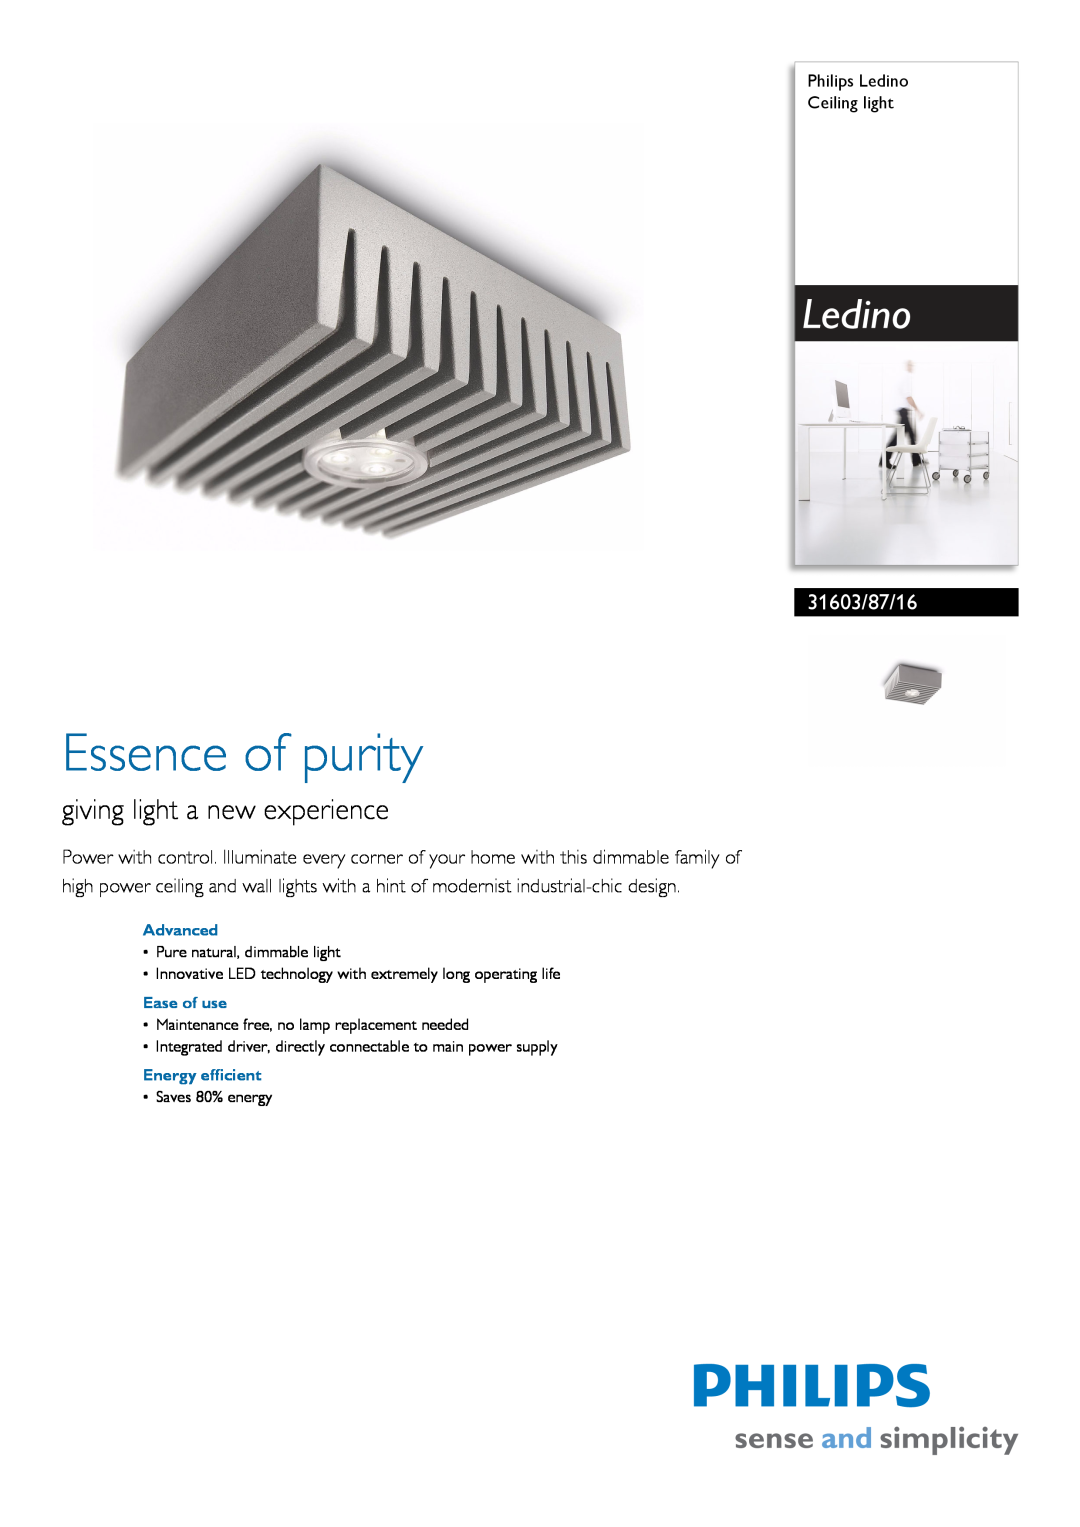 Philips 31603/87/16 manual Philips Ledino Ceiling light, Advanced, Ease of use, Energy efficient, Essence of purity 